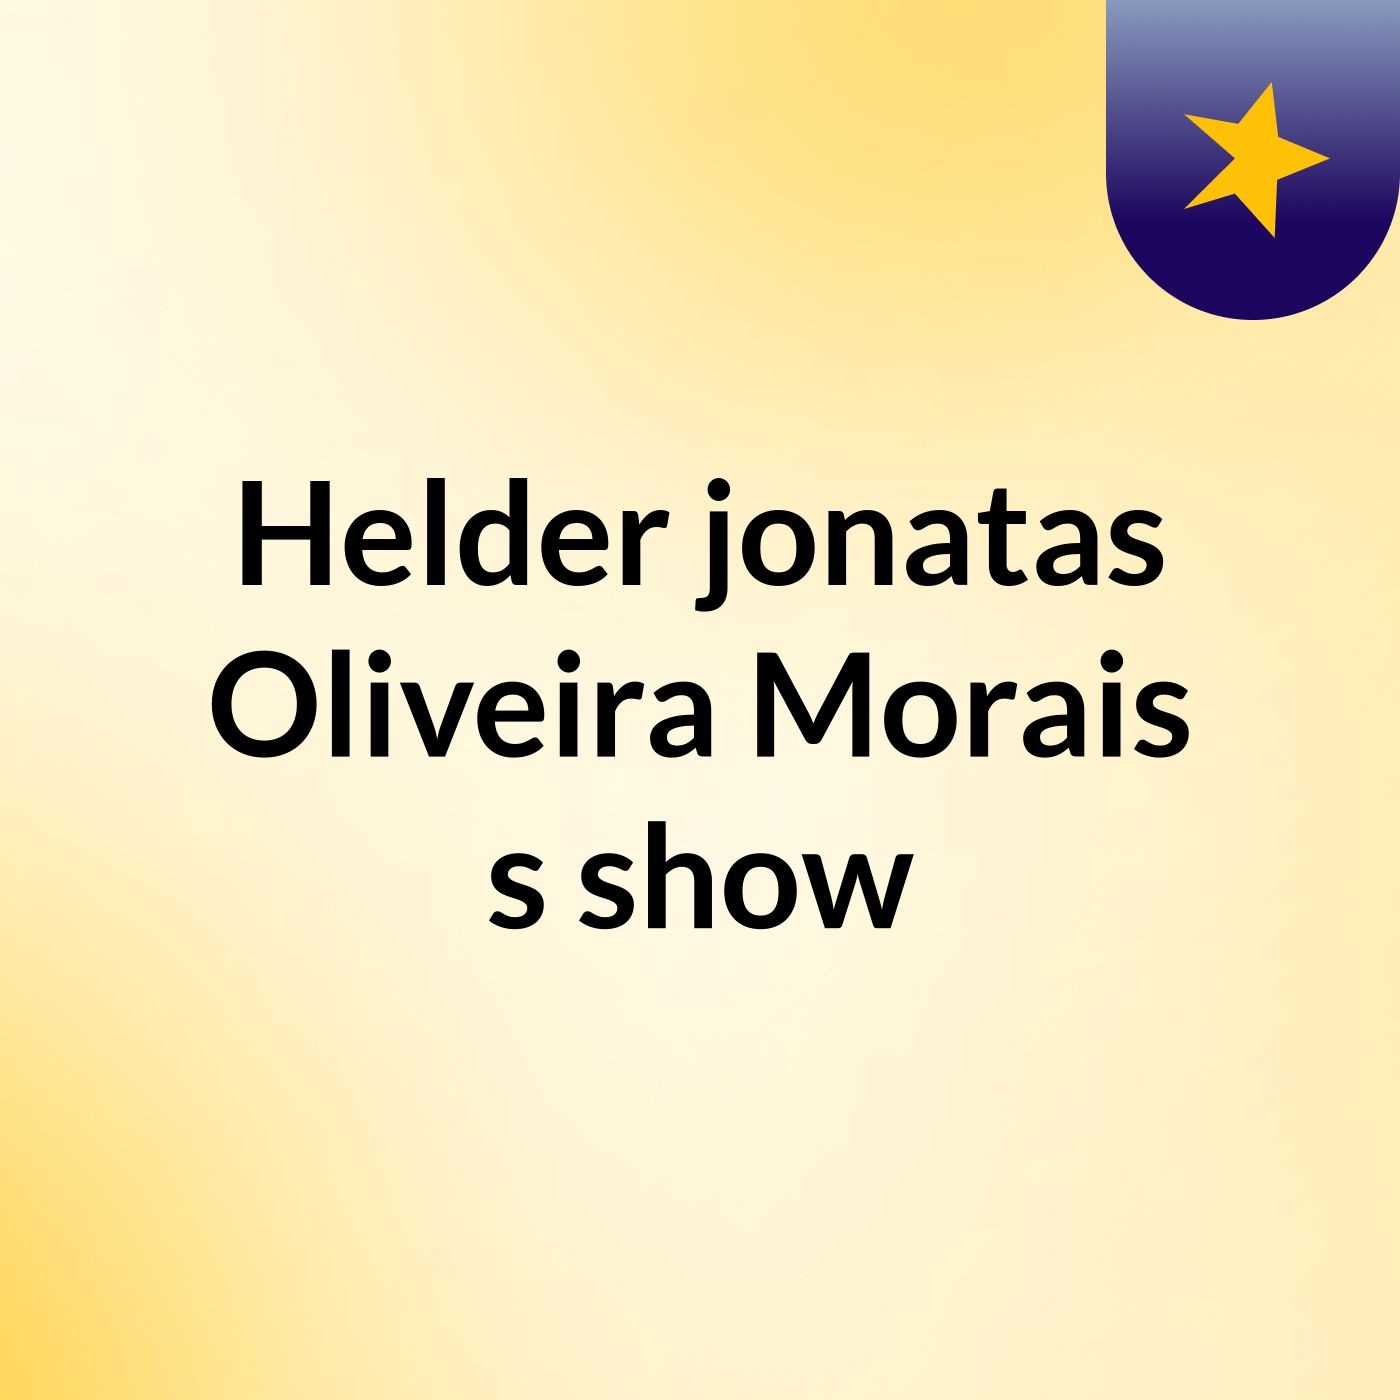 Helder jonatas Oliveira Morais's show